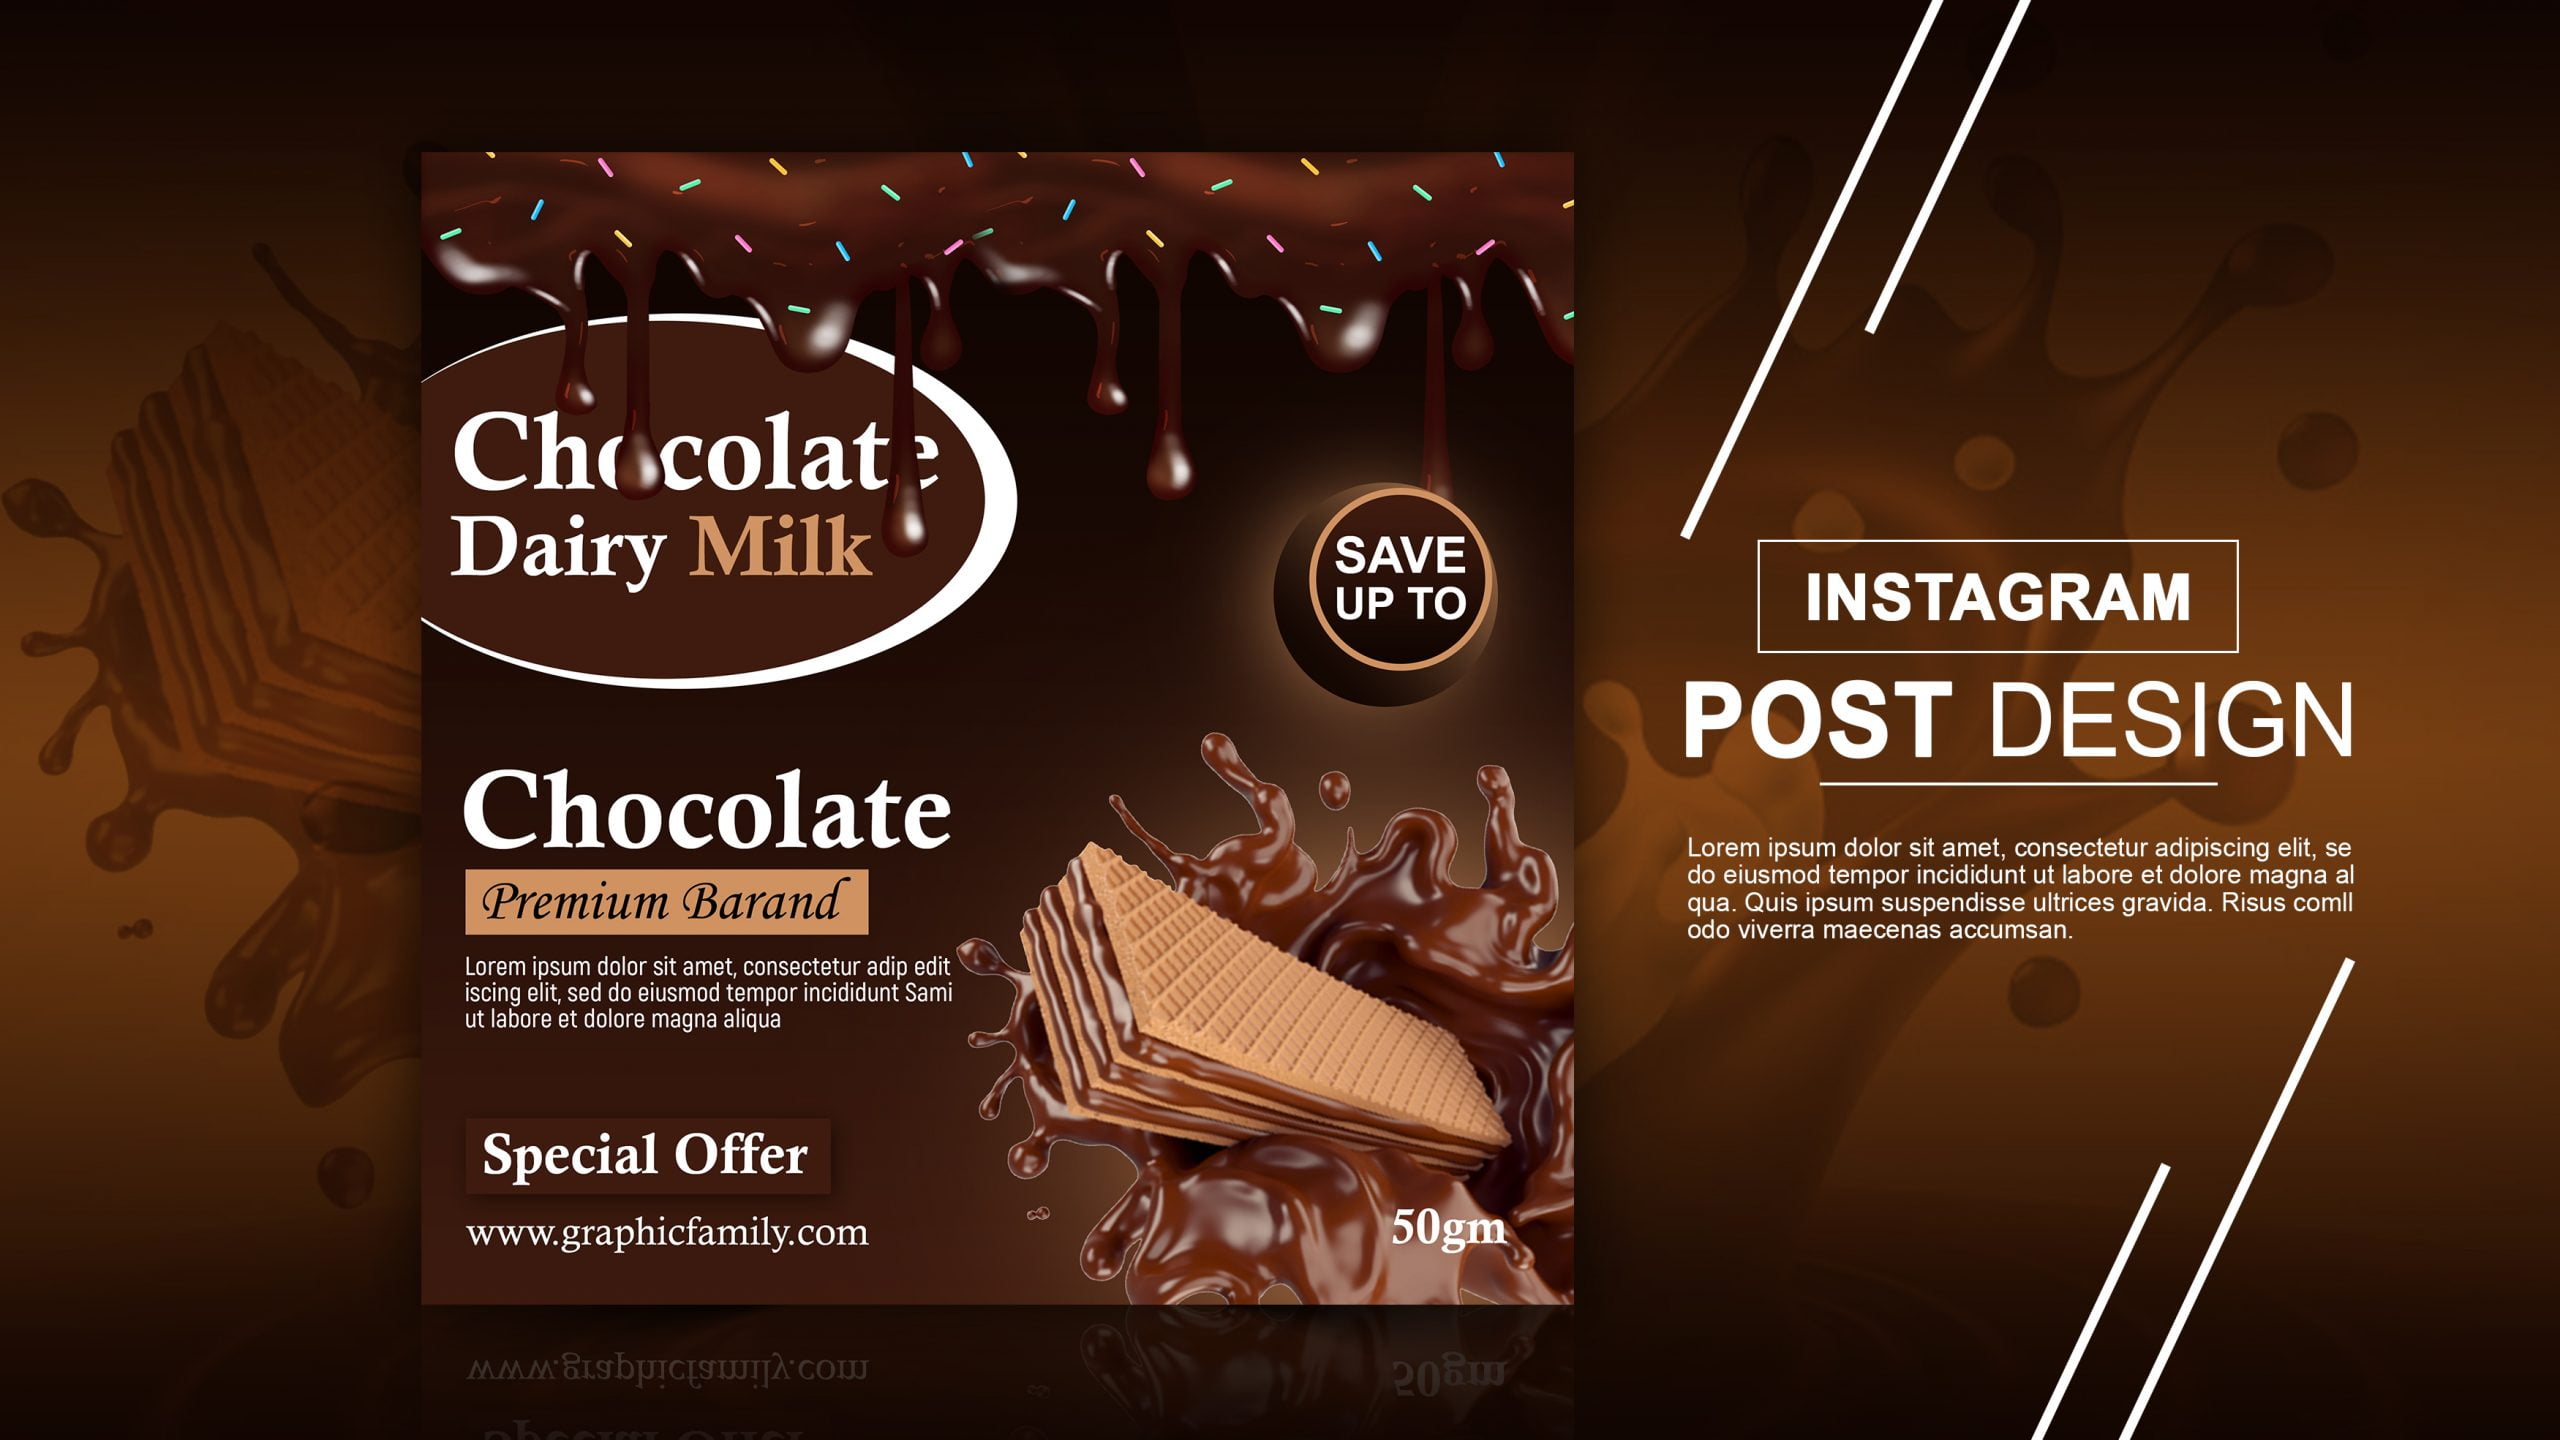 Шоколад во время поста. Пост дизайн Chocolate. Шоколад мокап. Дизайн поста шоколада. Реклама шоколада.